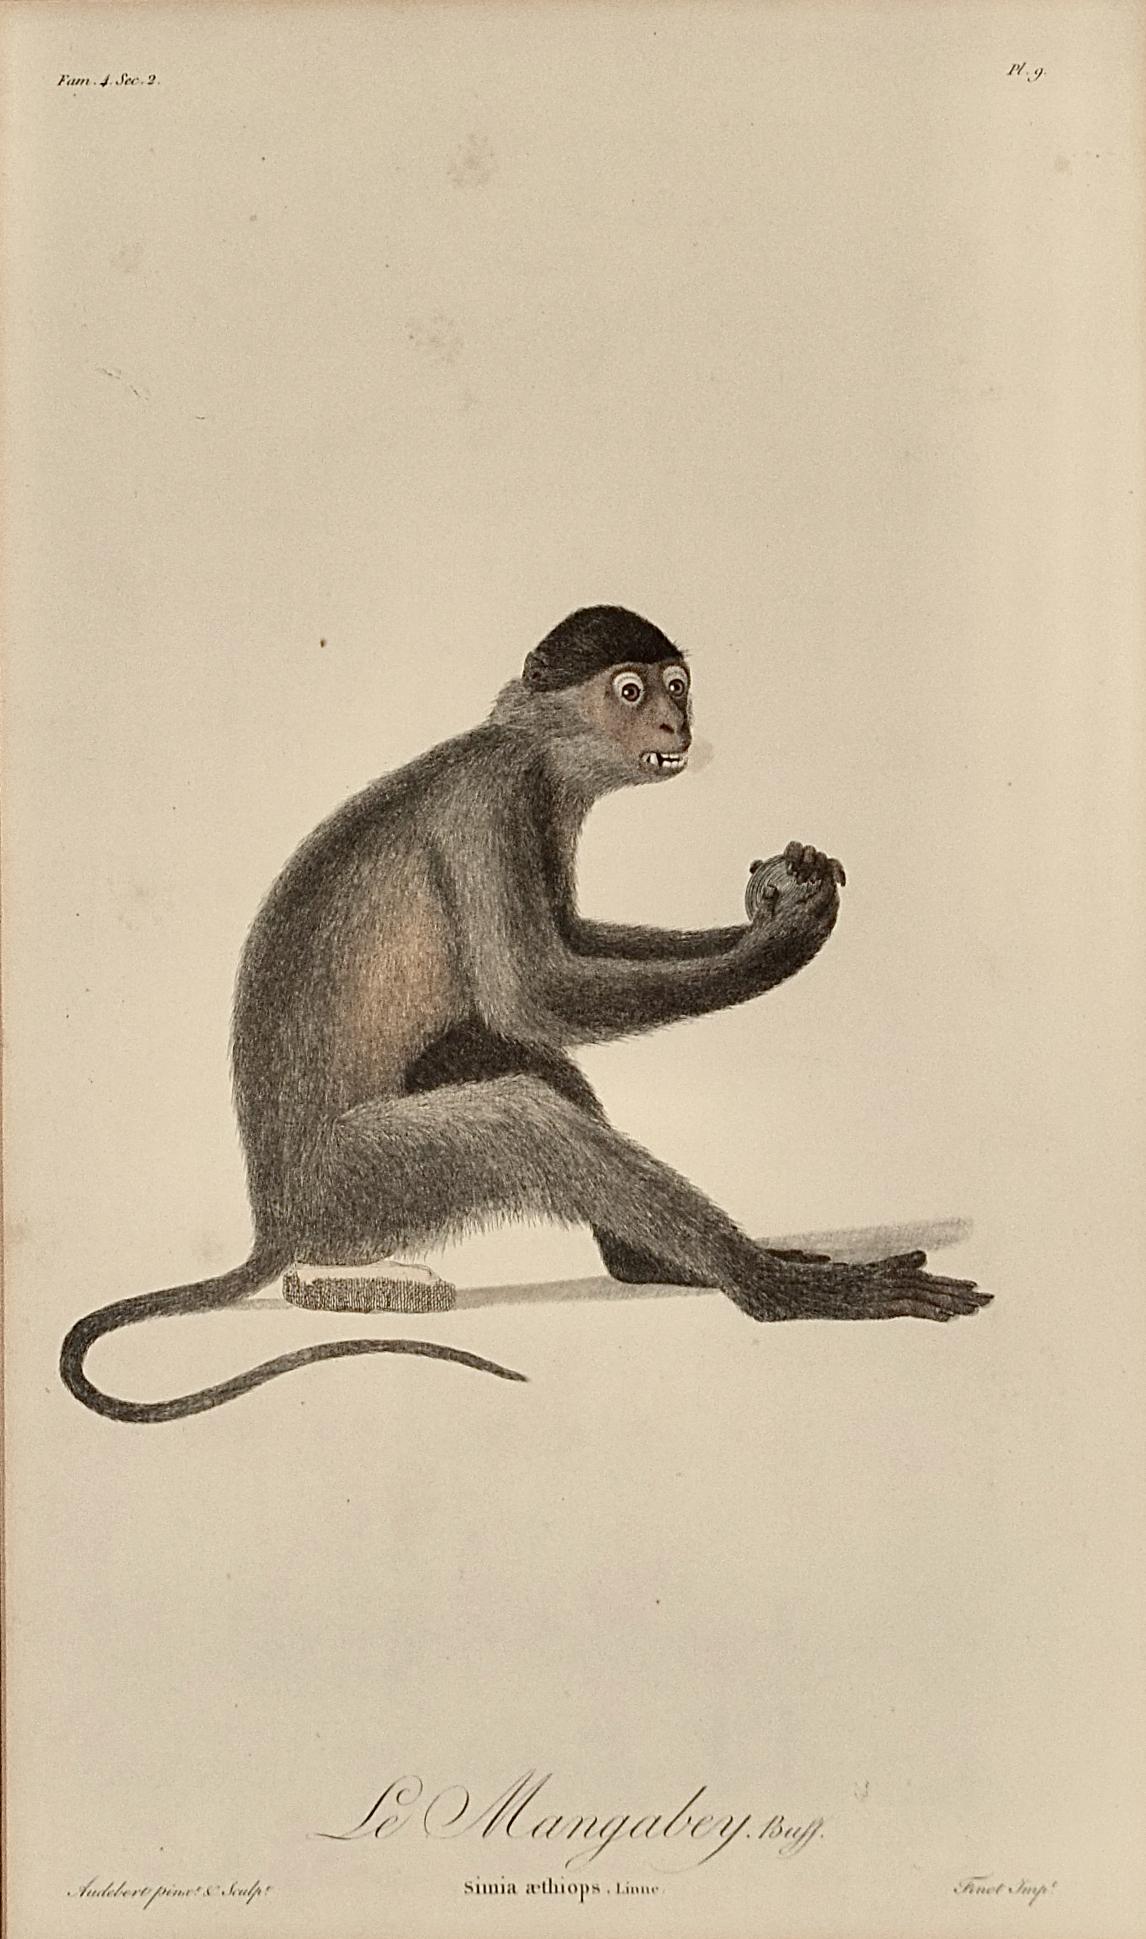  Le Mangabey Monkey: Framed Audebert 18th C. Hand-colored Engraving - Print by Jean Baptiste Auderbert